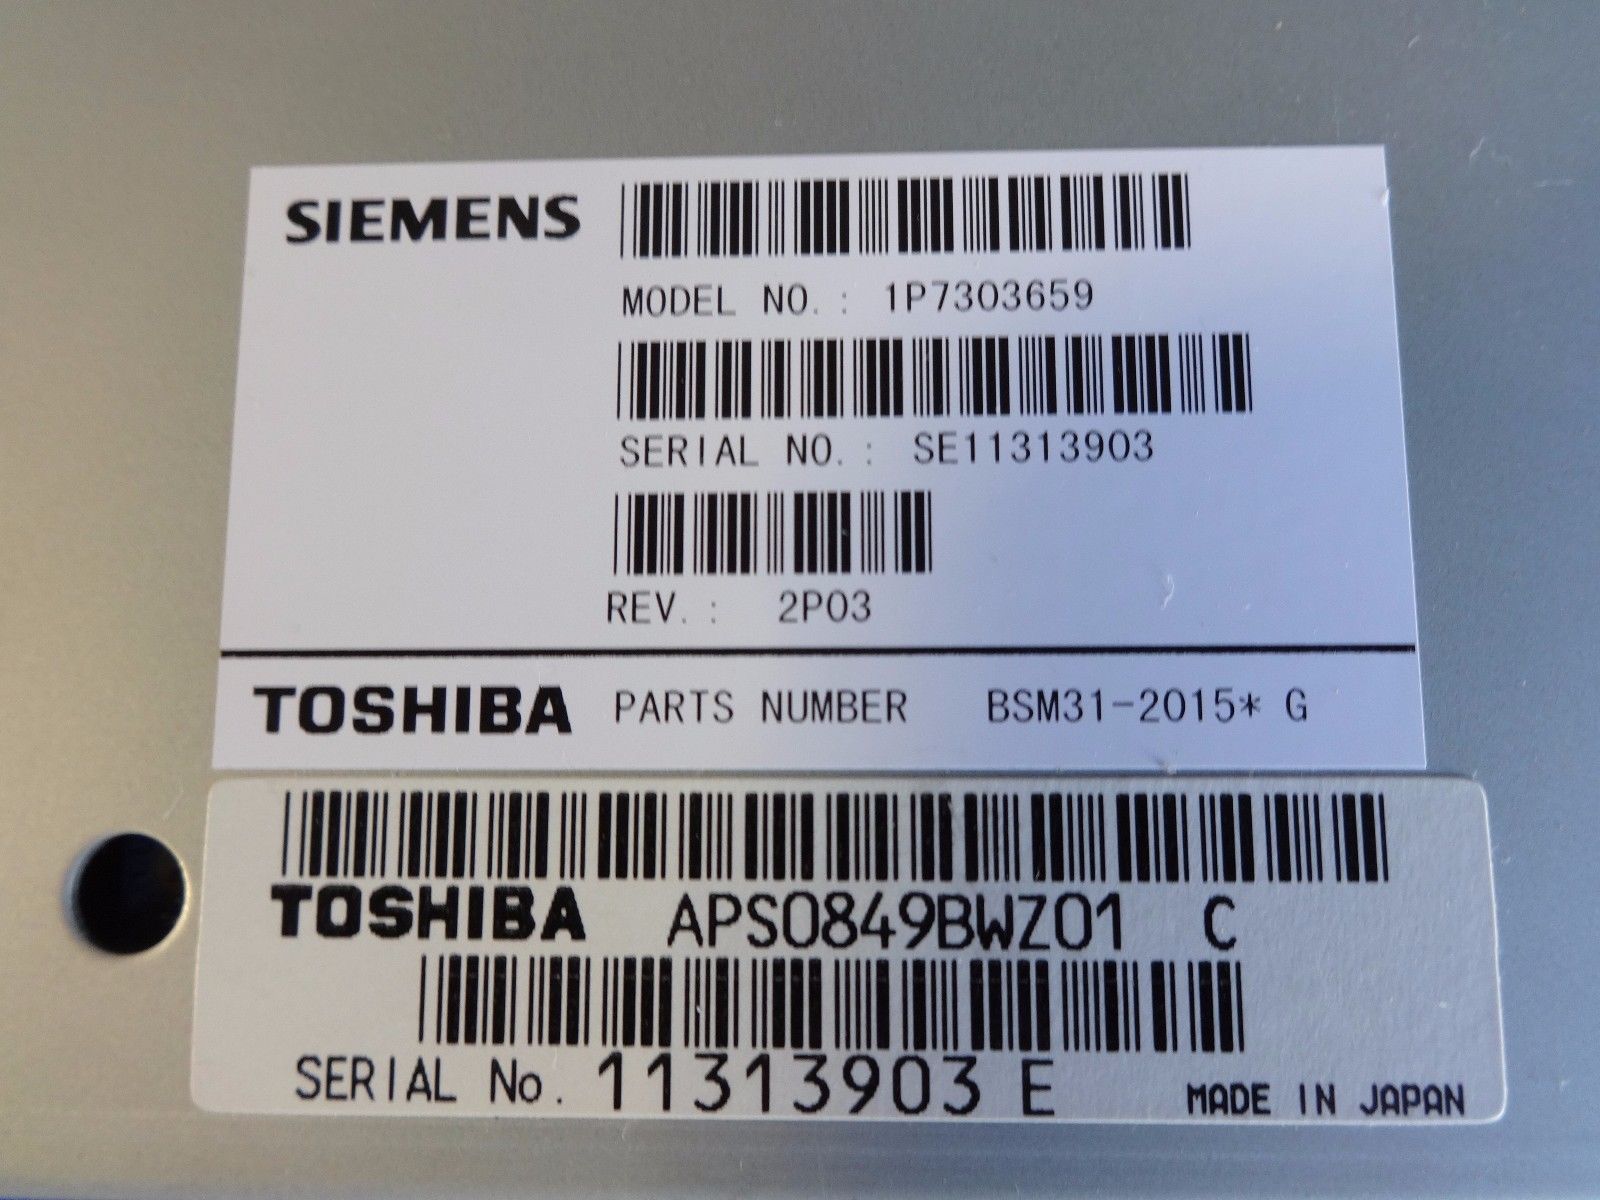 TOSHIBA / Siemens Antares Ultrasound 7303659 DIGITAL POWER SUPPLY BSM31-2015 DIAGNOSTIC ULTRASOUND MACHINES FOR SALE